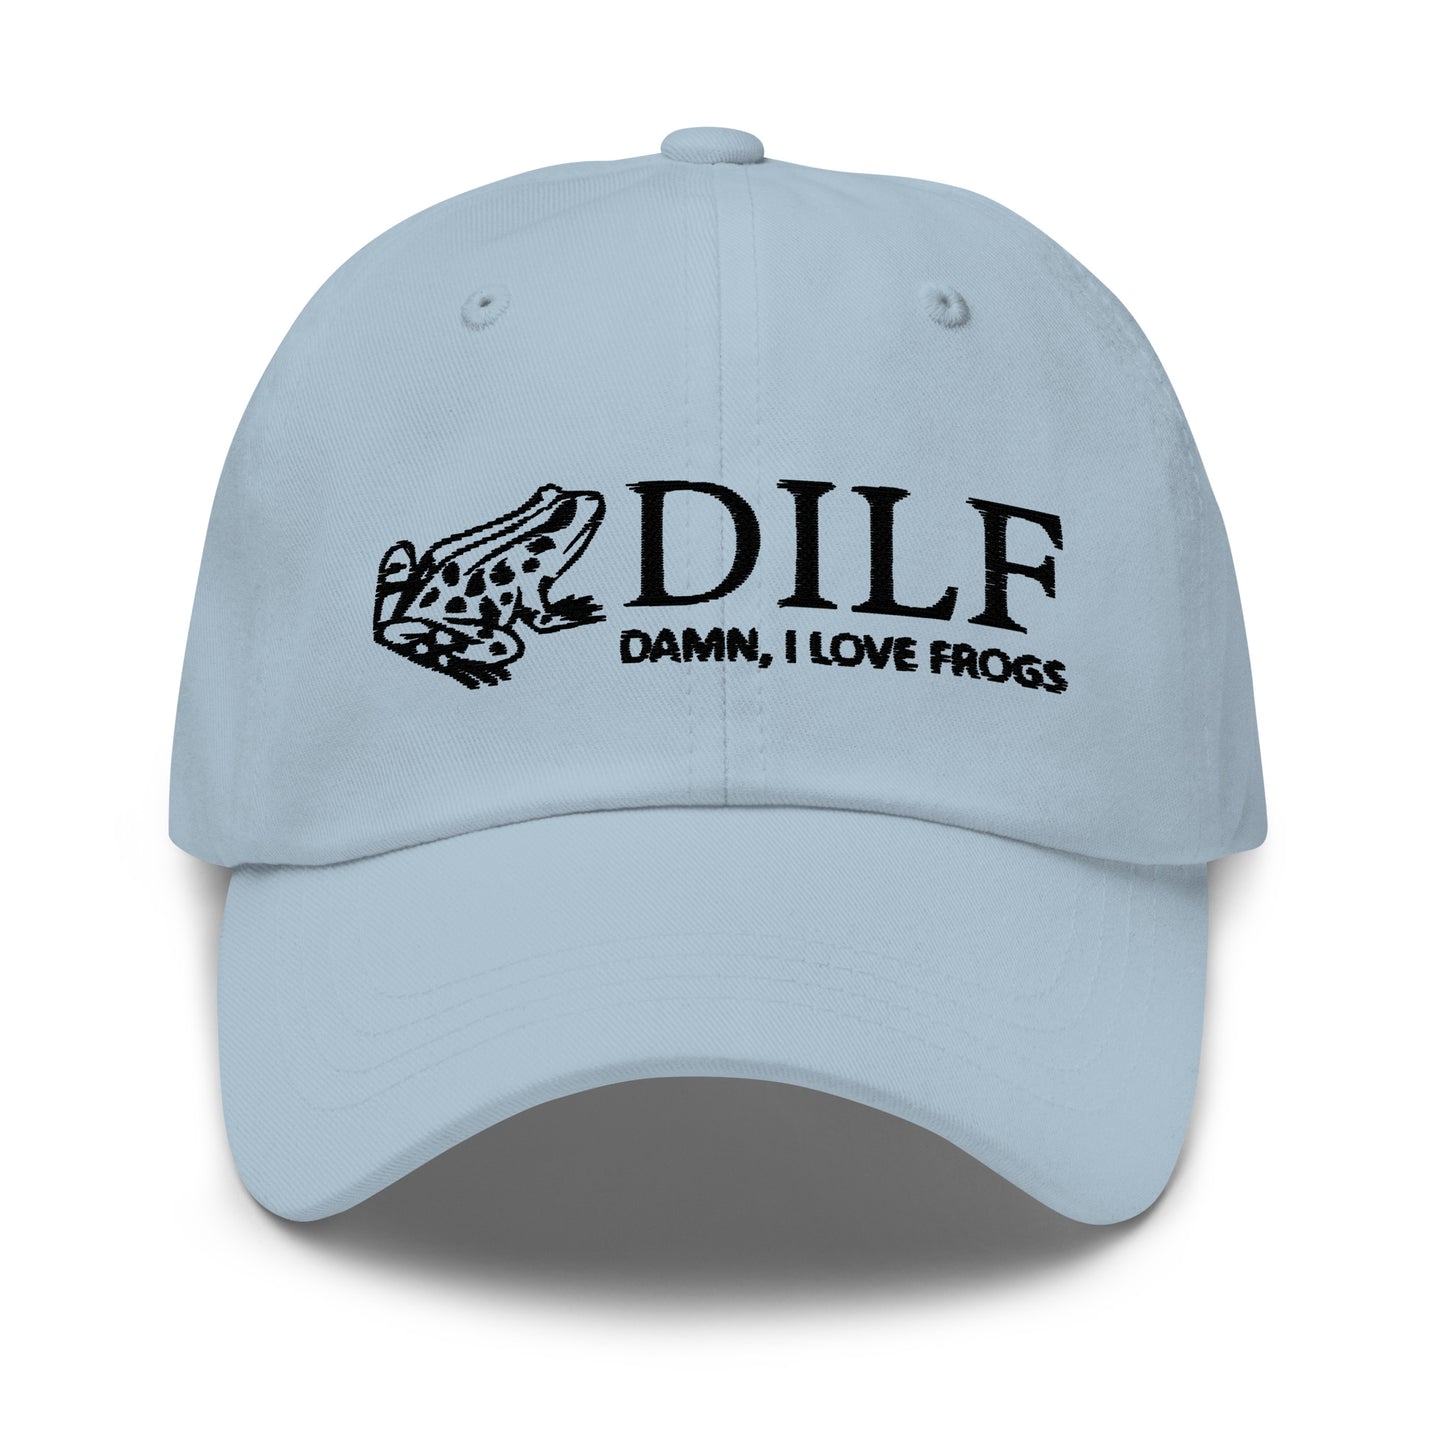 DILF (Damn, I Love Frogs) hat